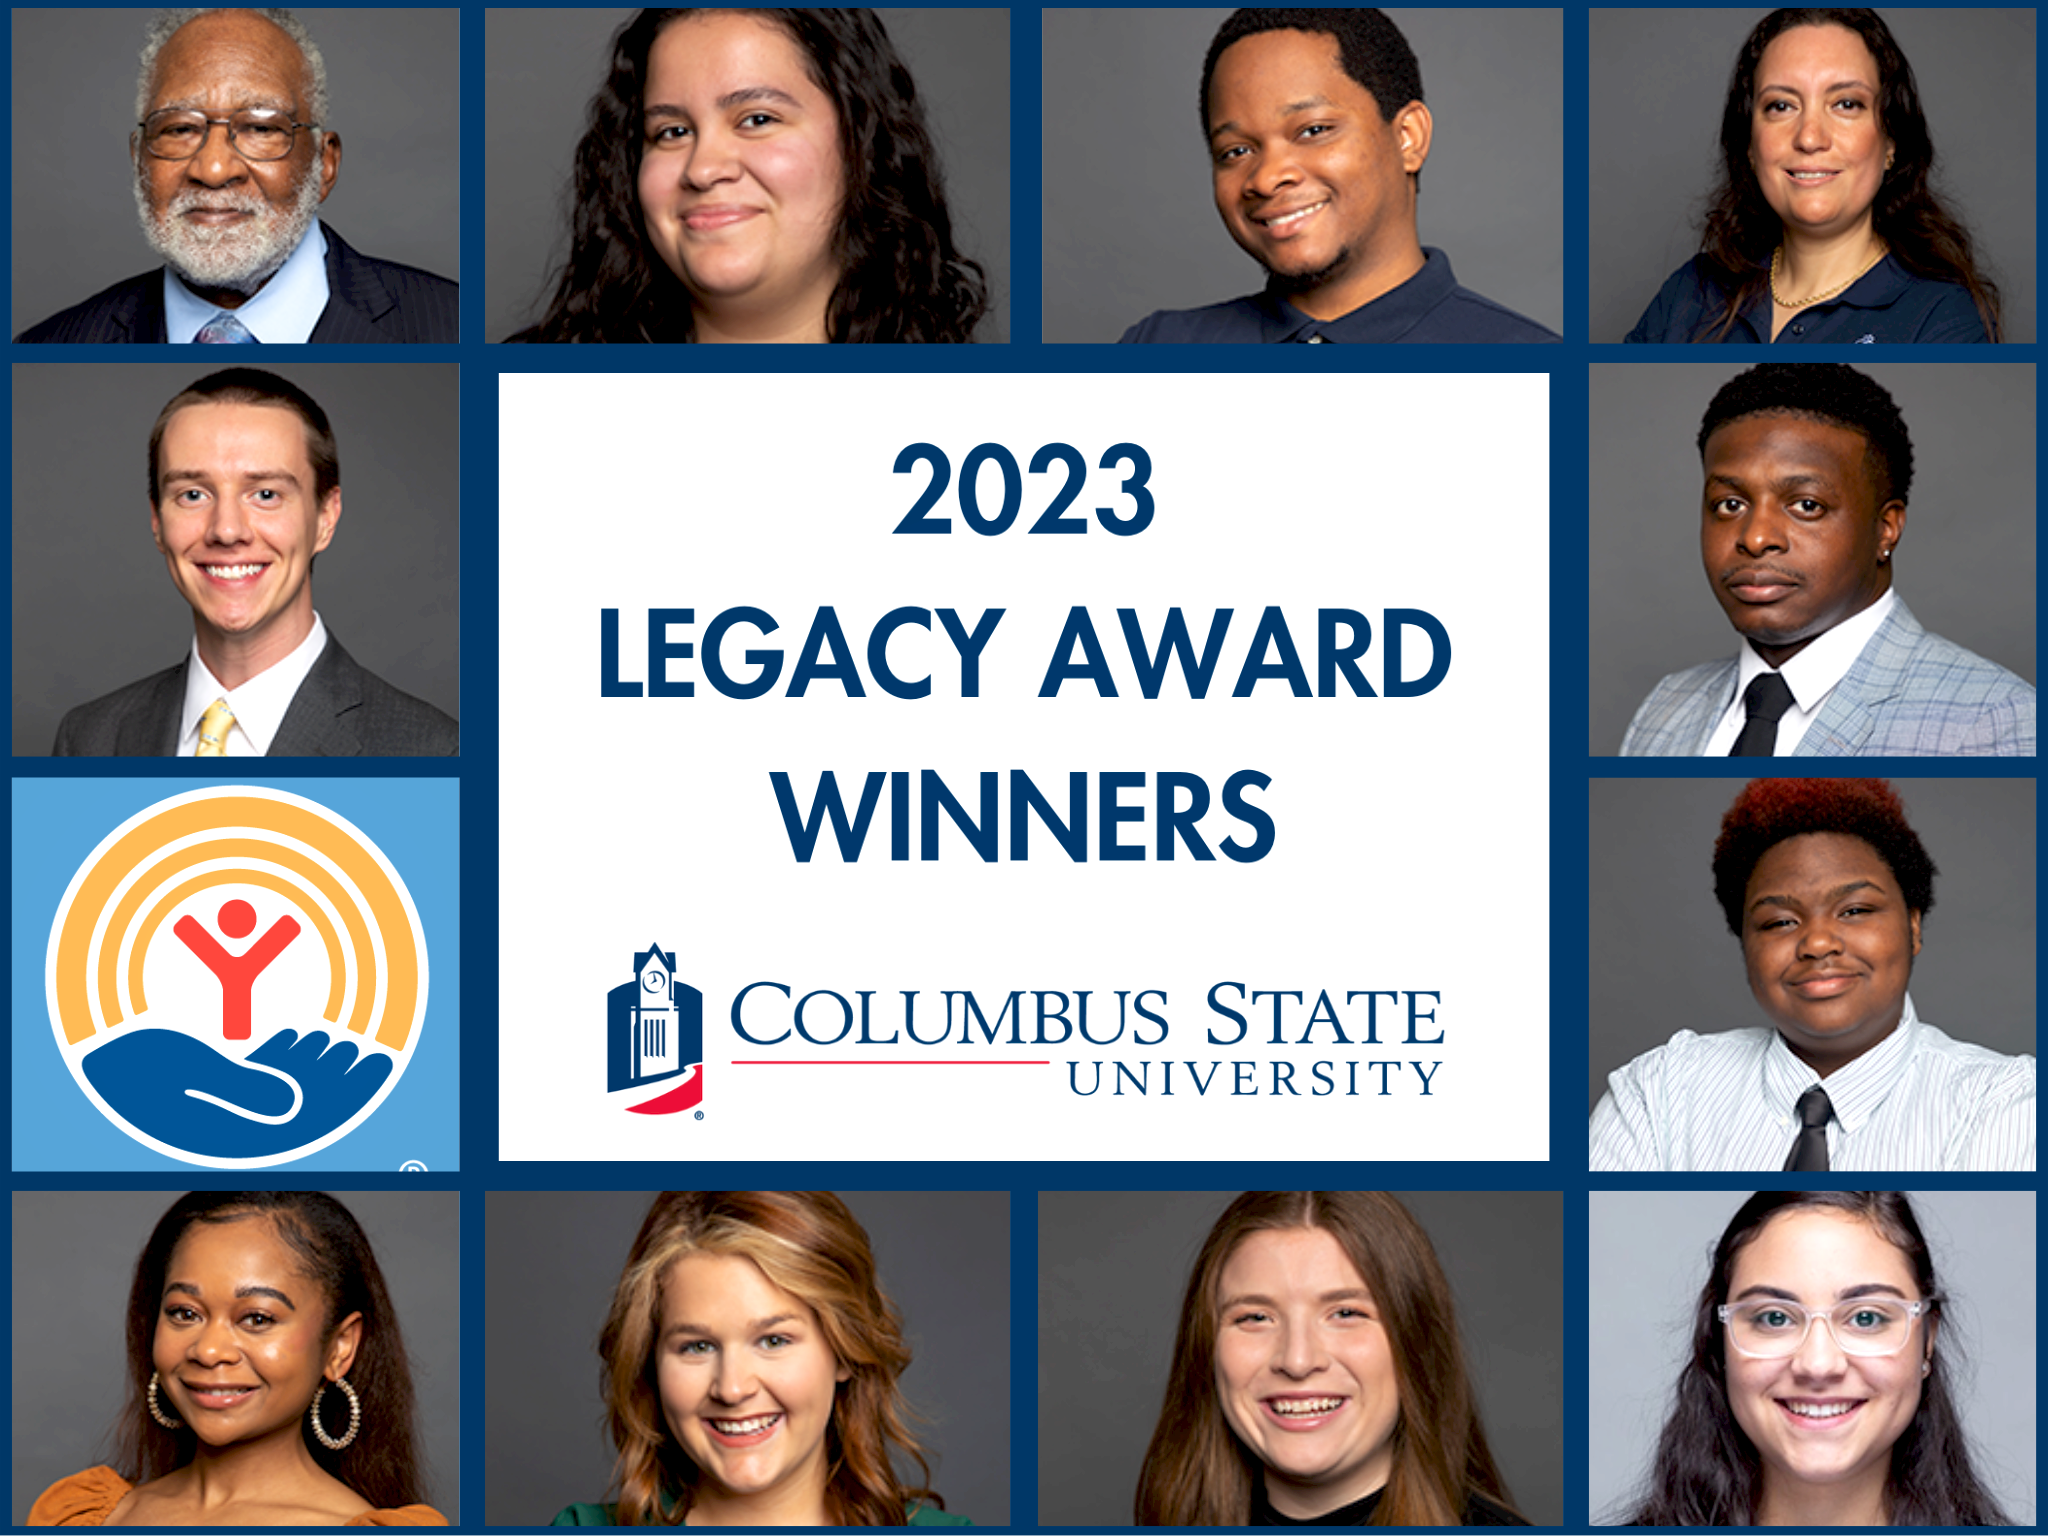 Headshots of 2023 Legacy Award Winners, Columbus State University logo